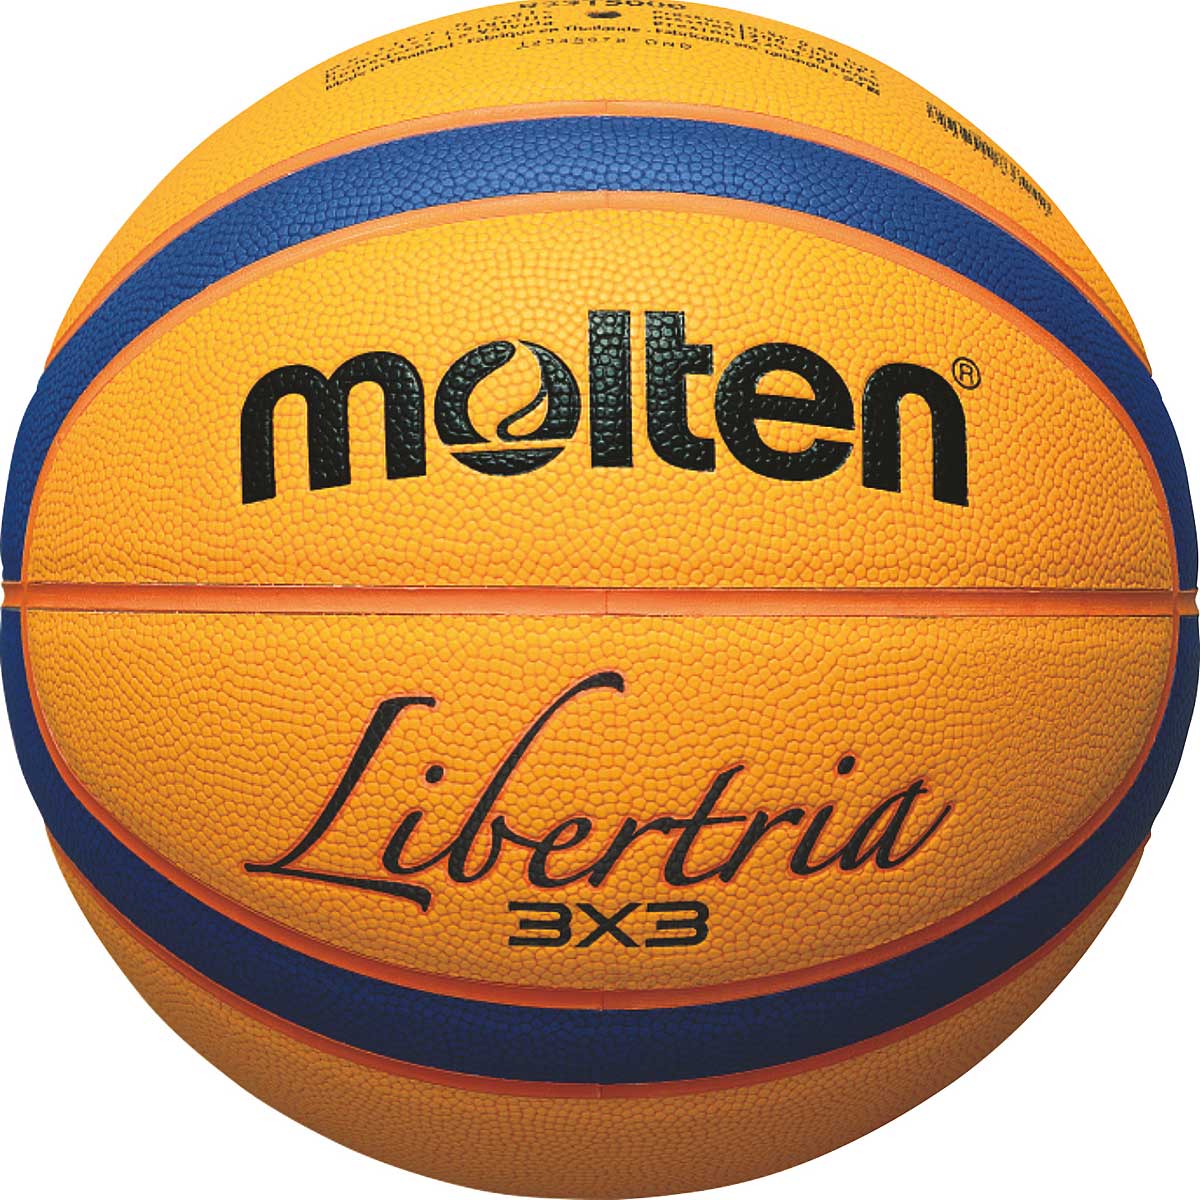 Image of Molten B33t5000 Basketball, Yellow/blue/orange